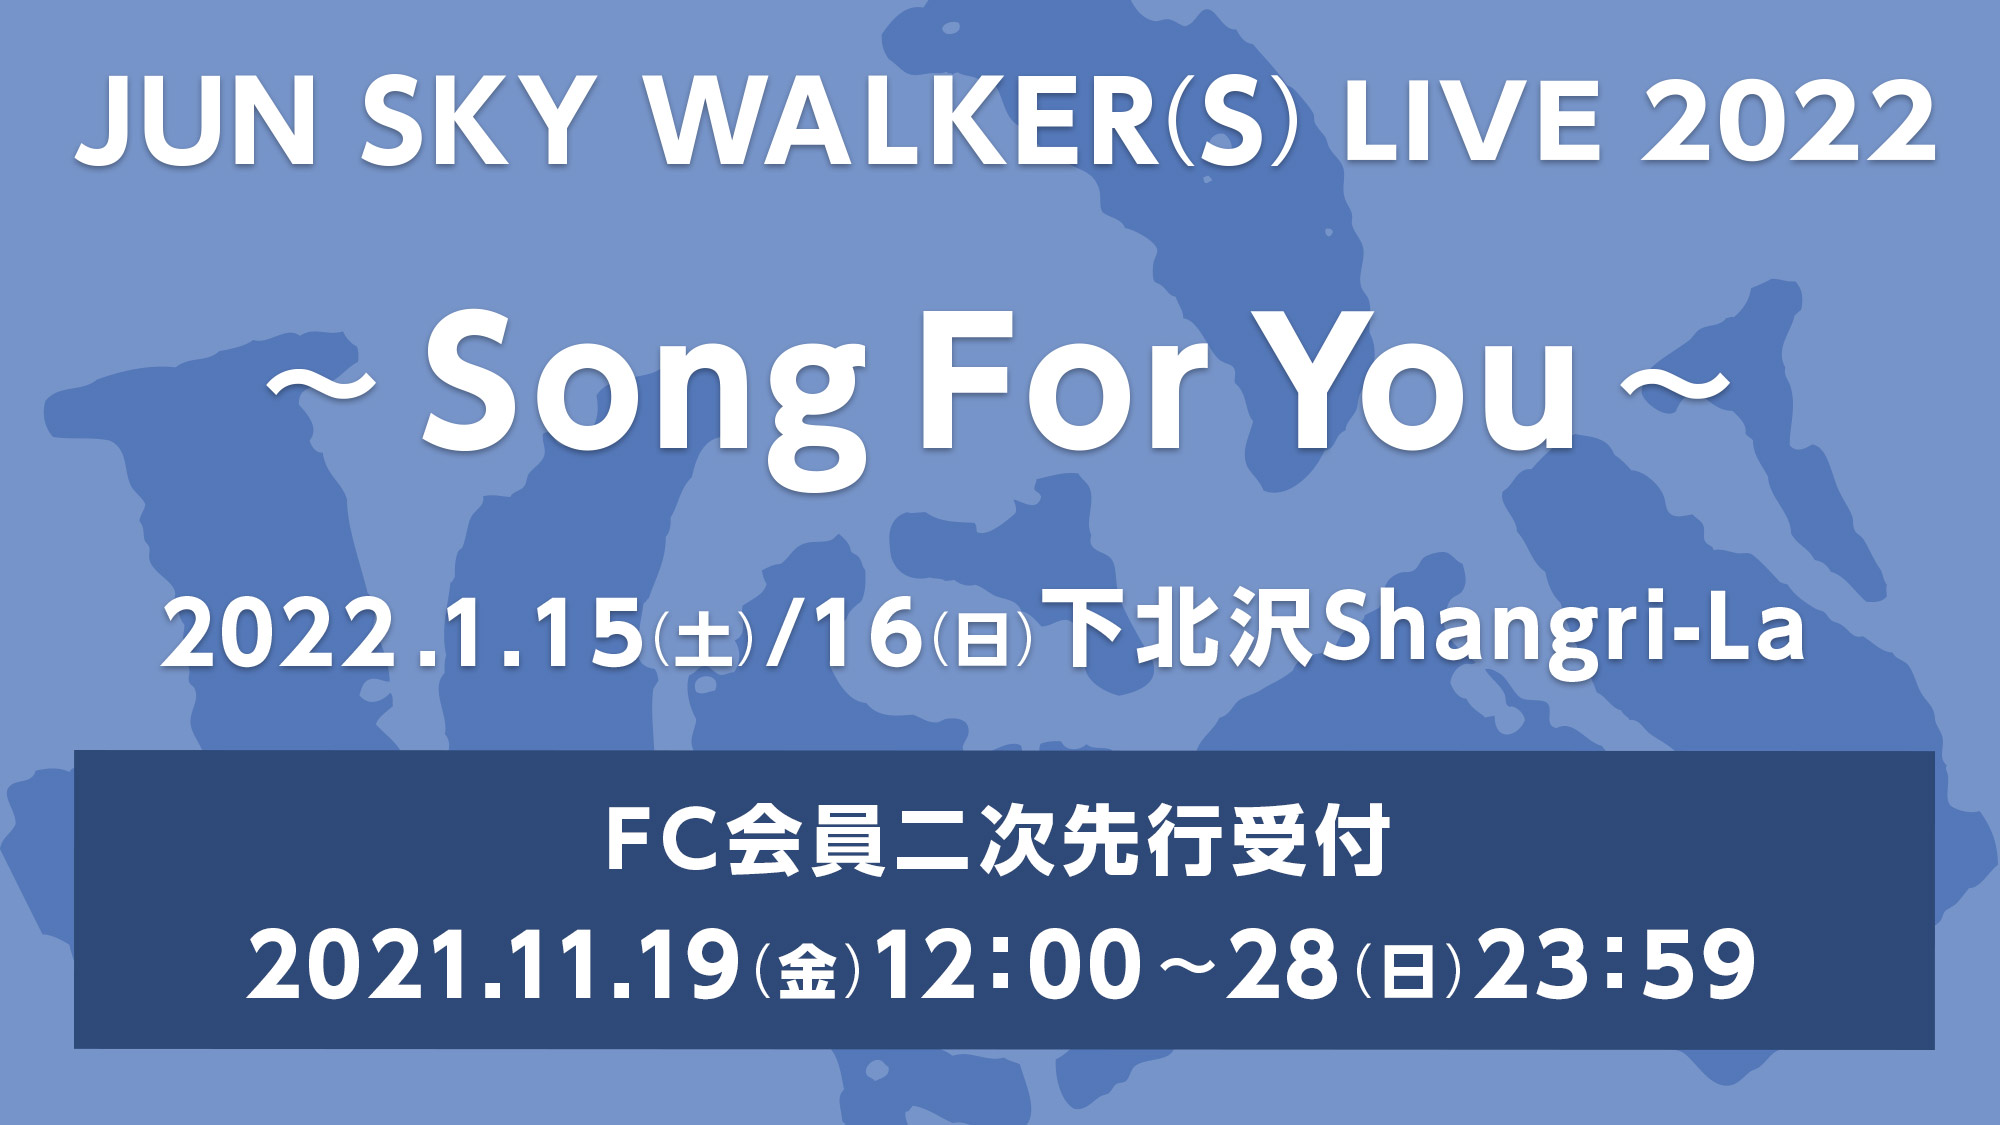 JUN SKY WALKER(S) LIVE 2022～Song For You～